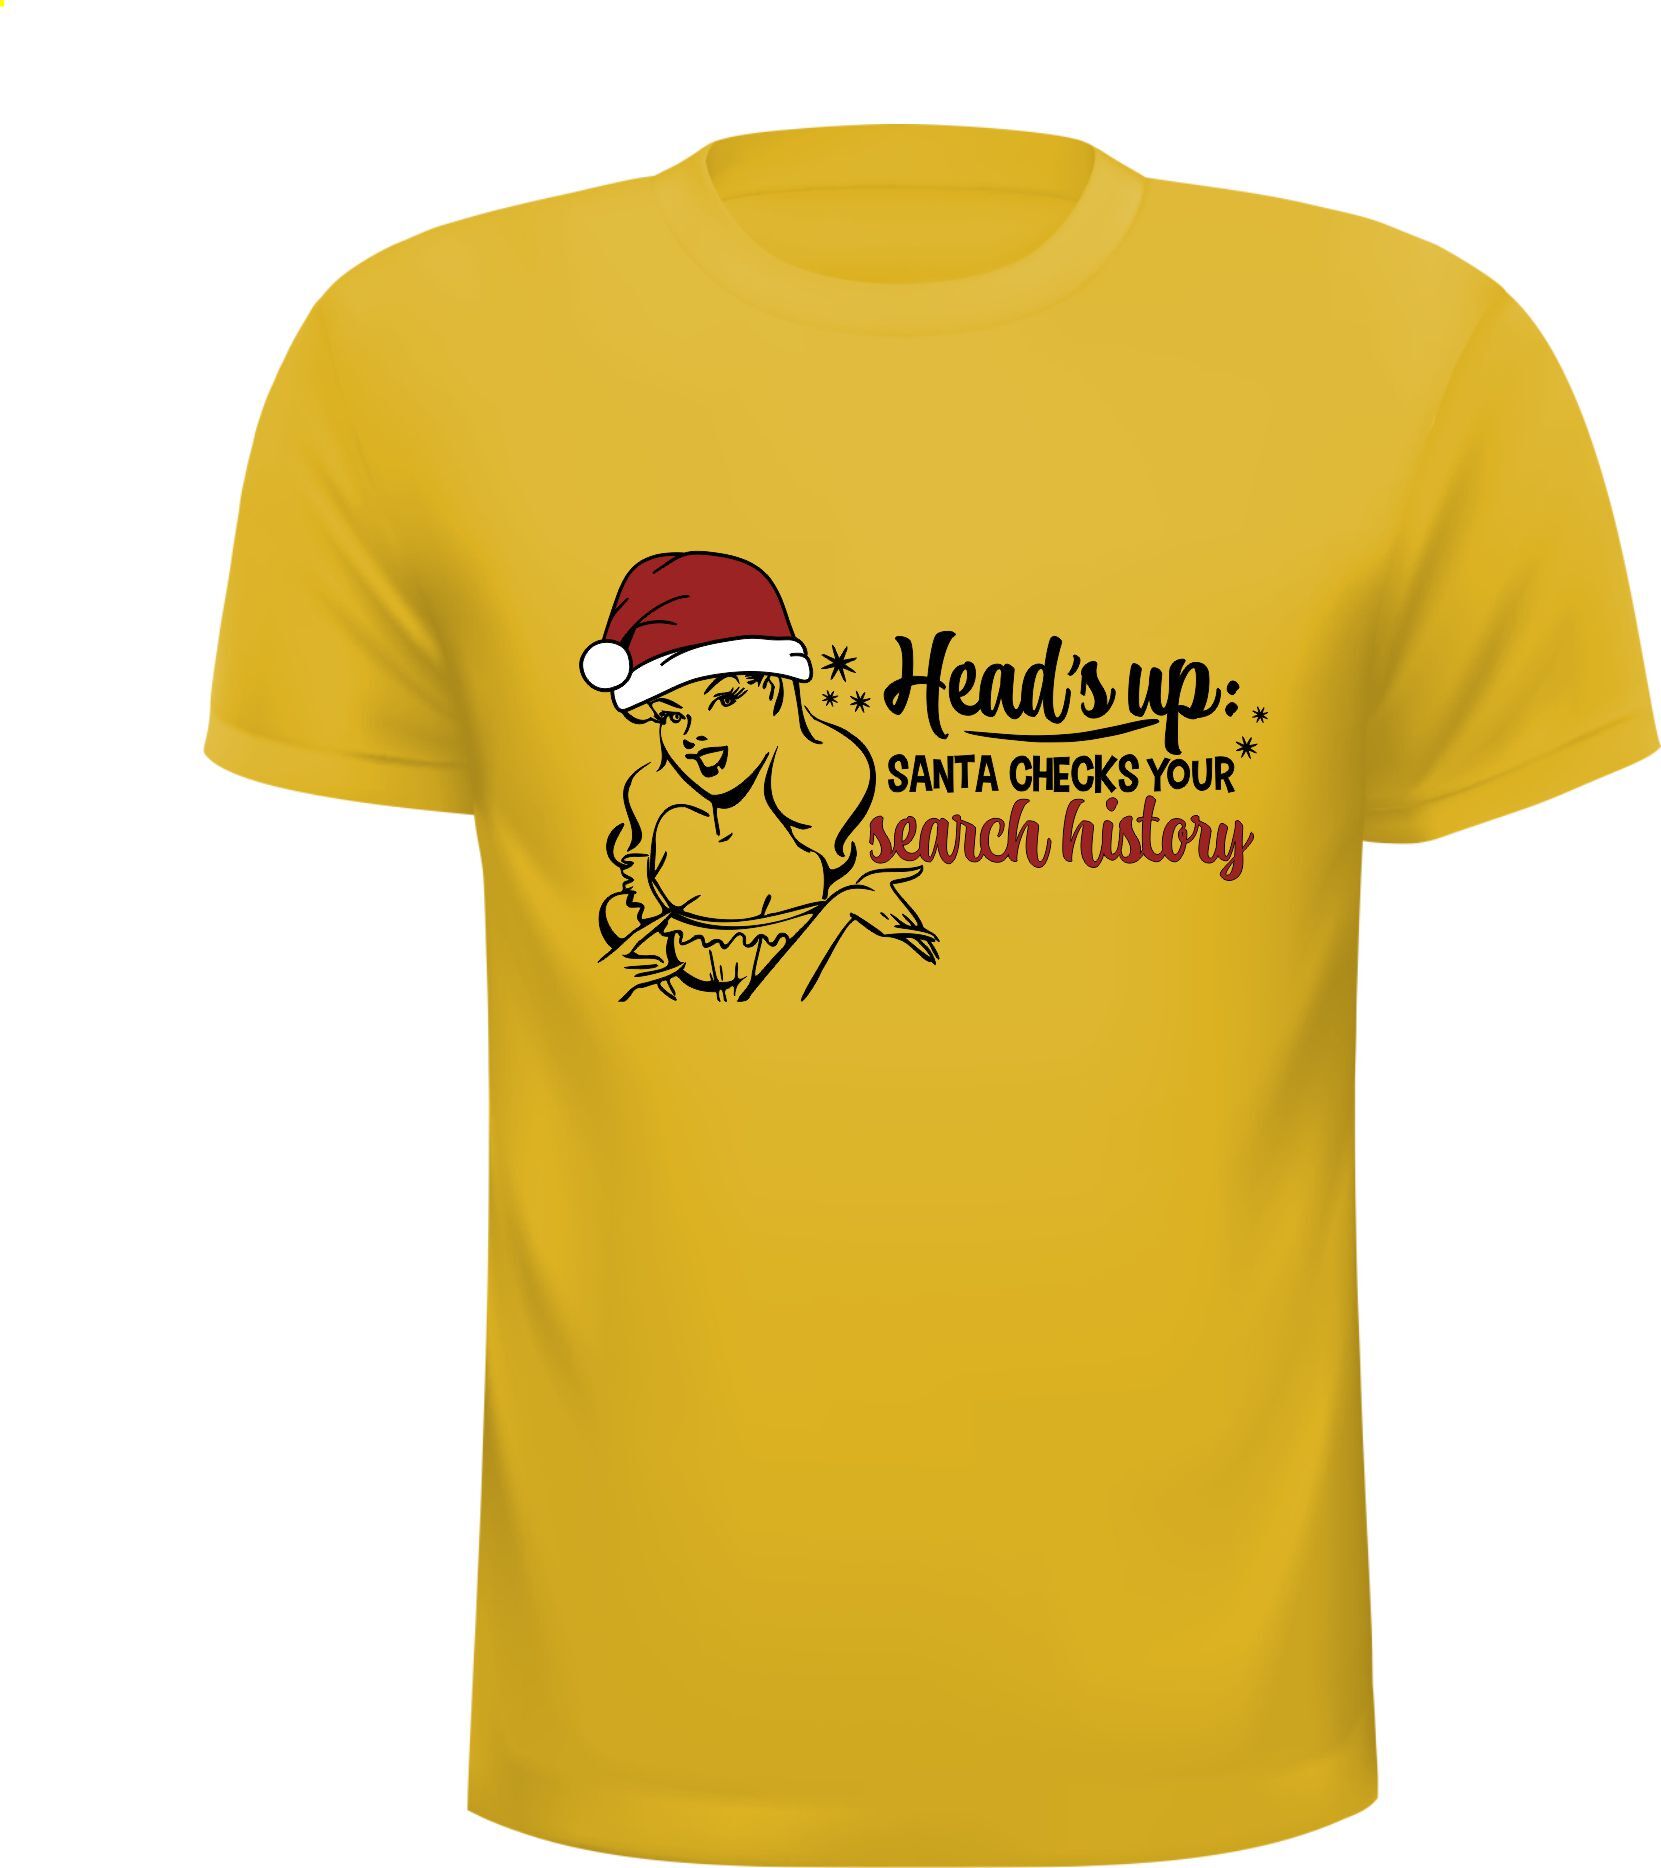 T-shirt voor de kerst heads up santa checks your search history